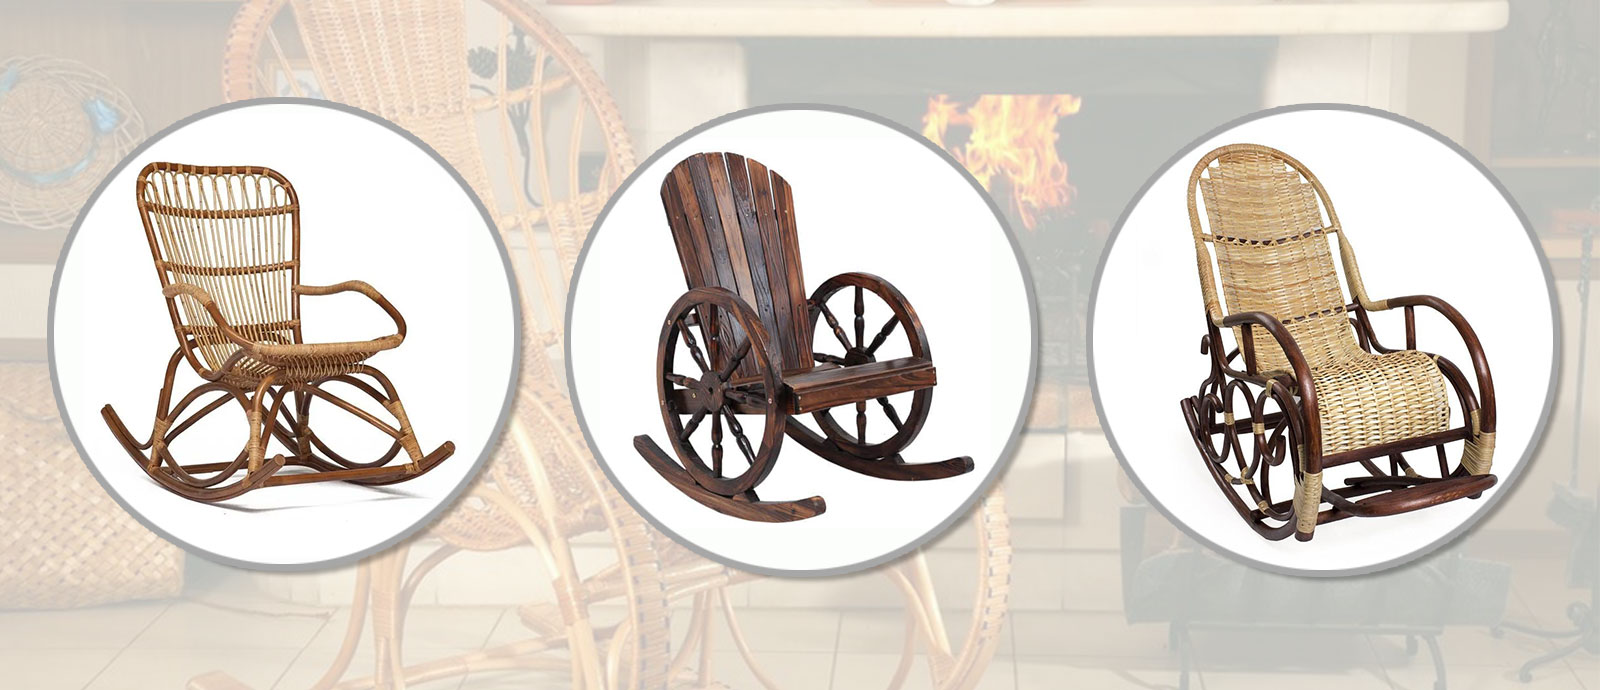 ретро-кресла из древесины